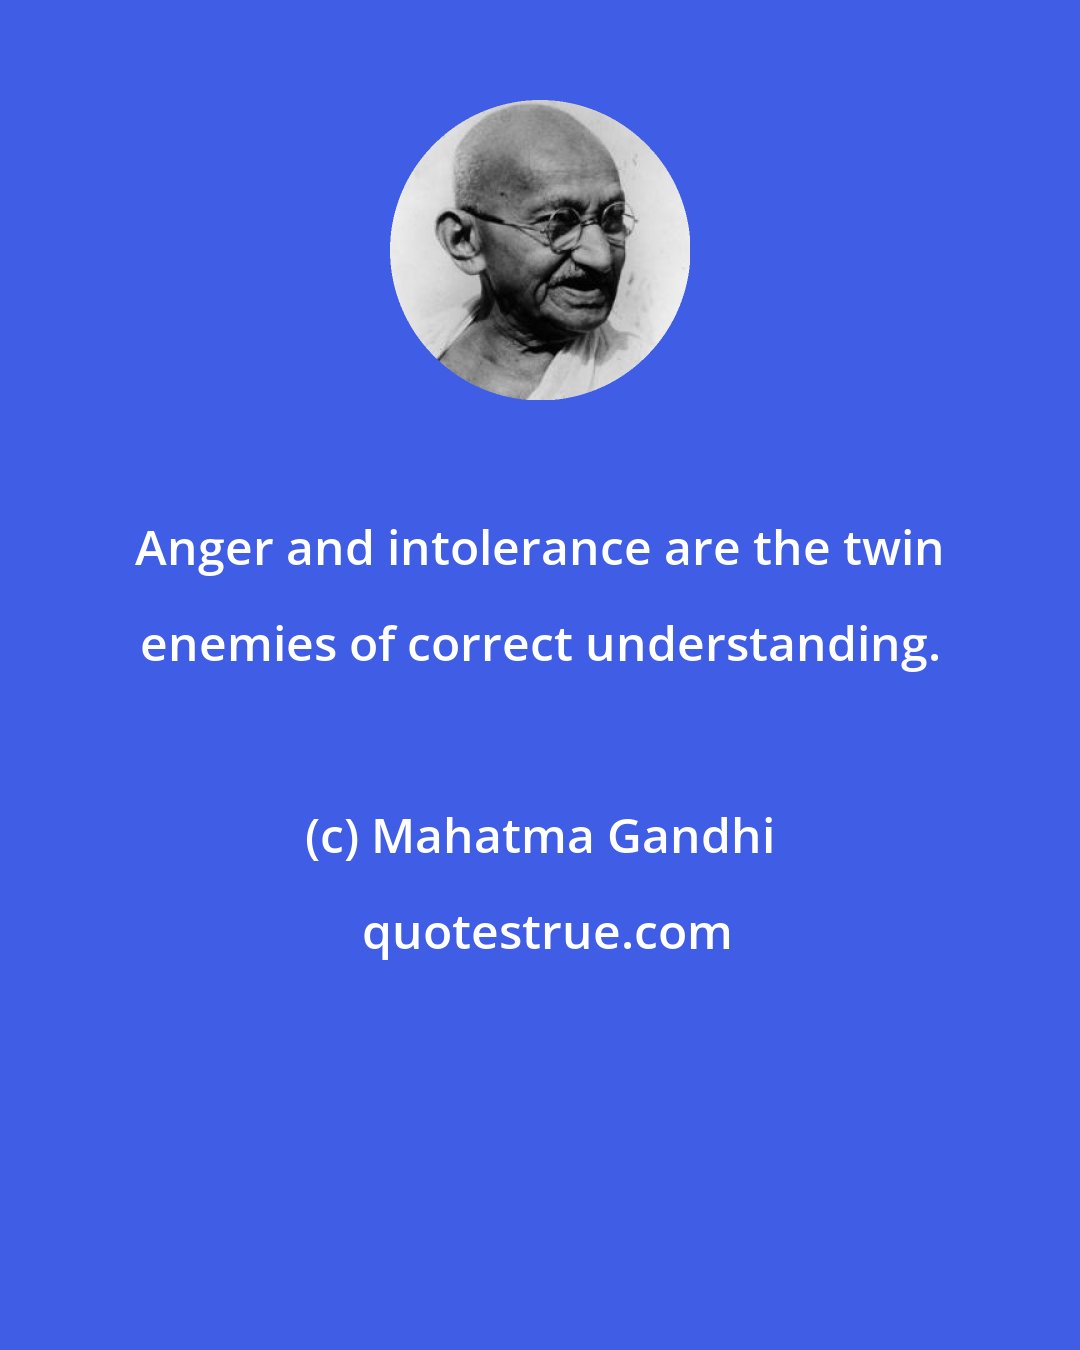 Mahatma Gandhi: Anger and intolerance are the twin enemies of correct understanding.